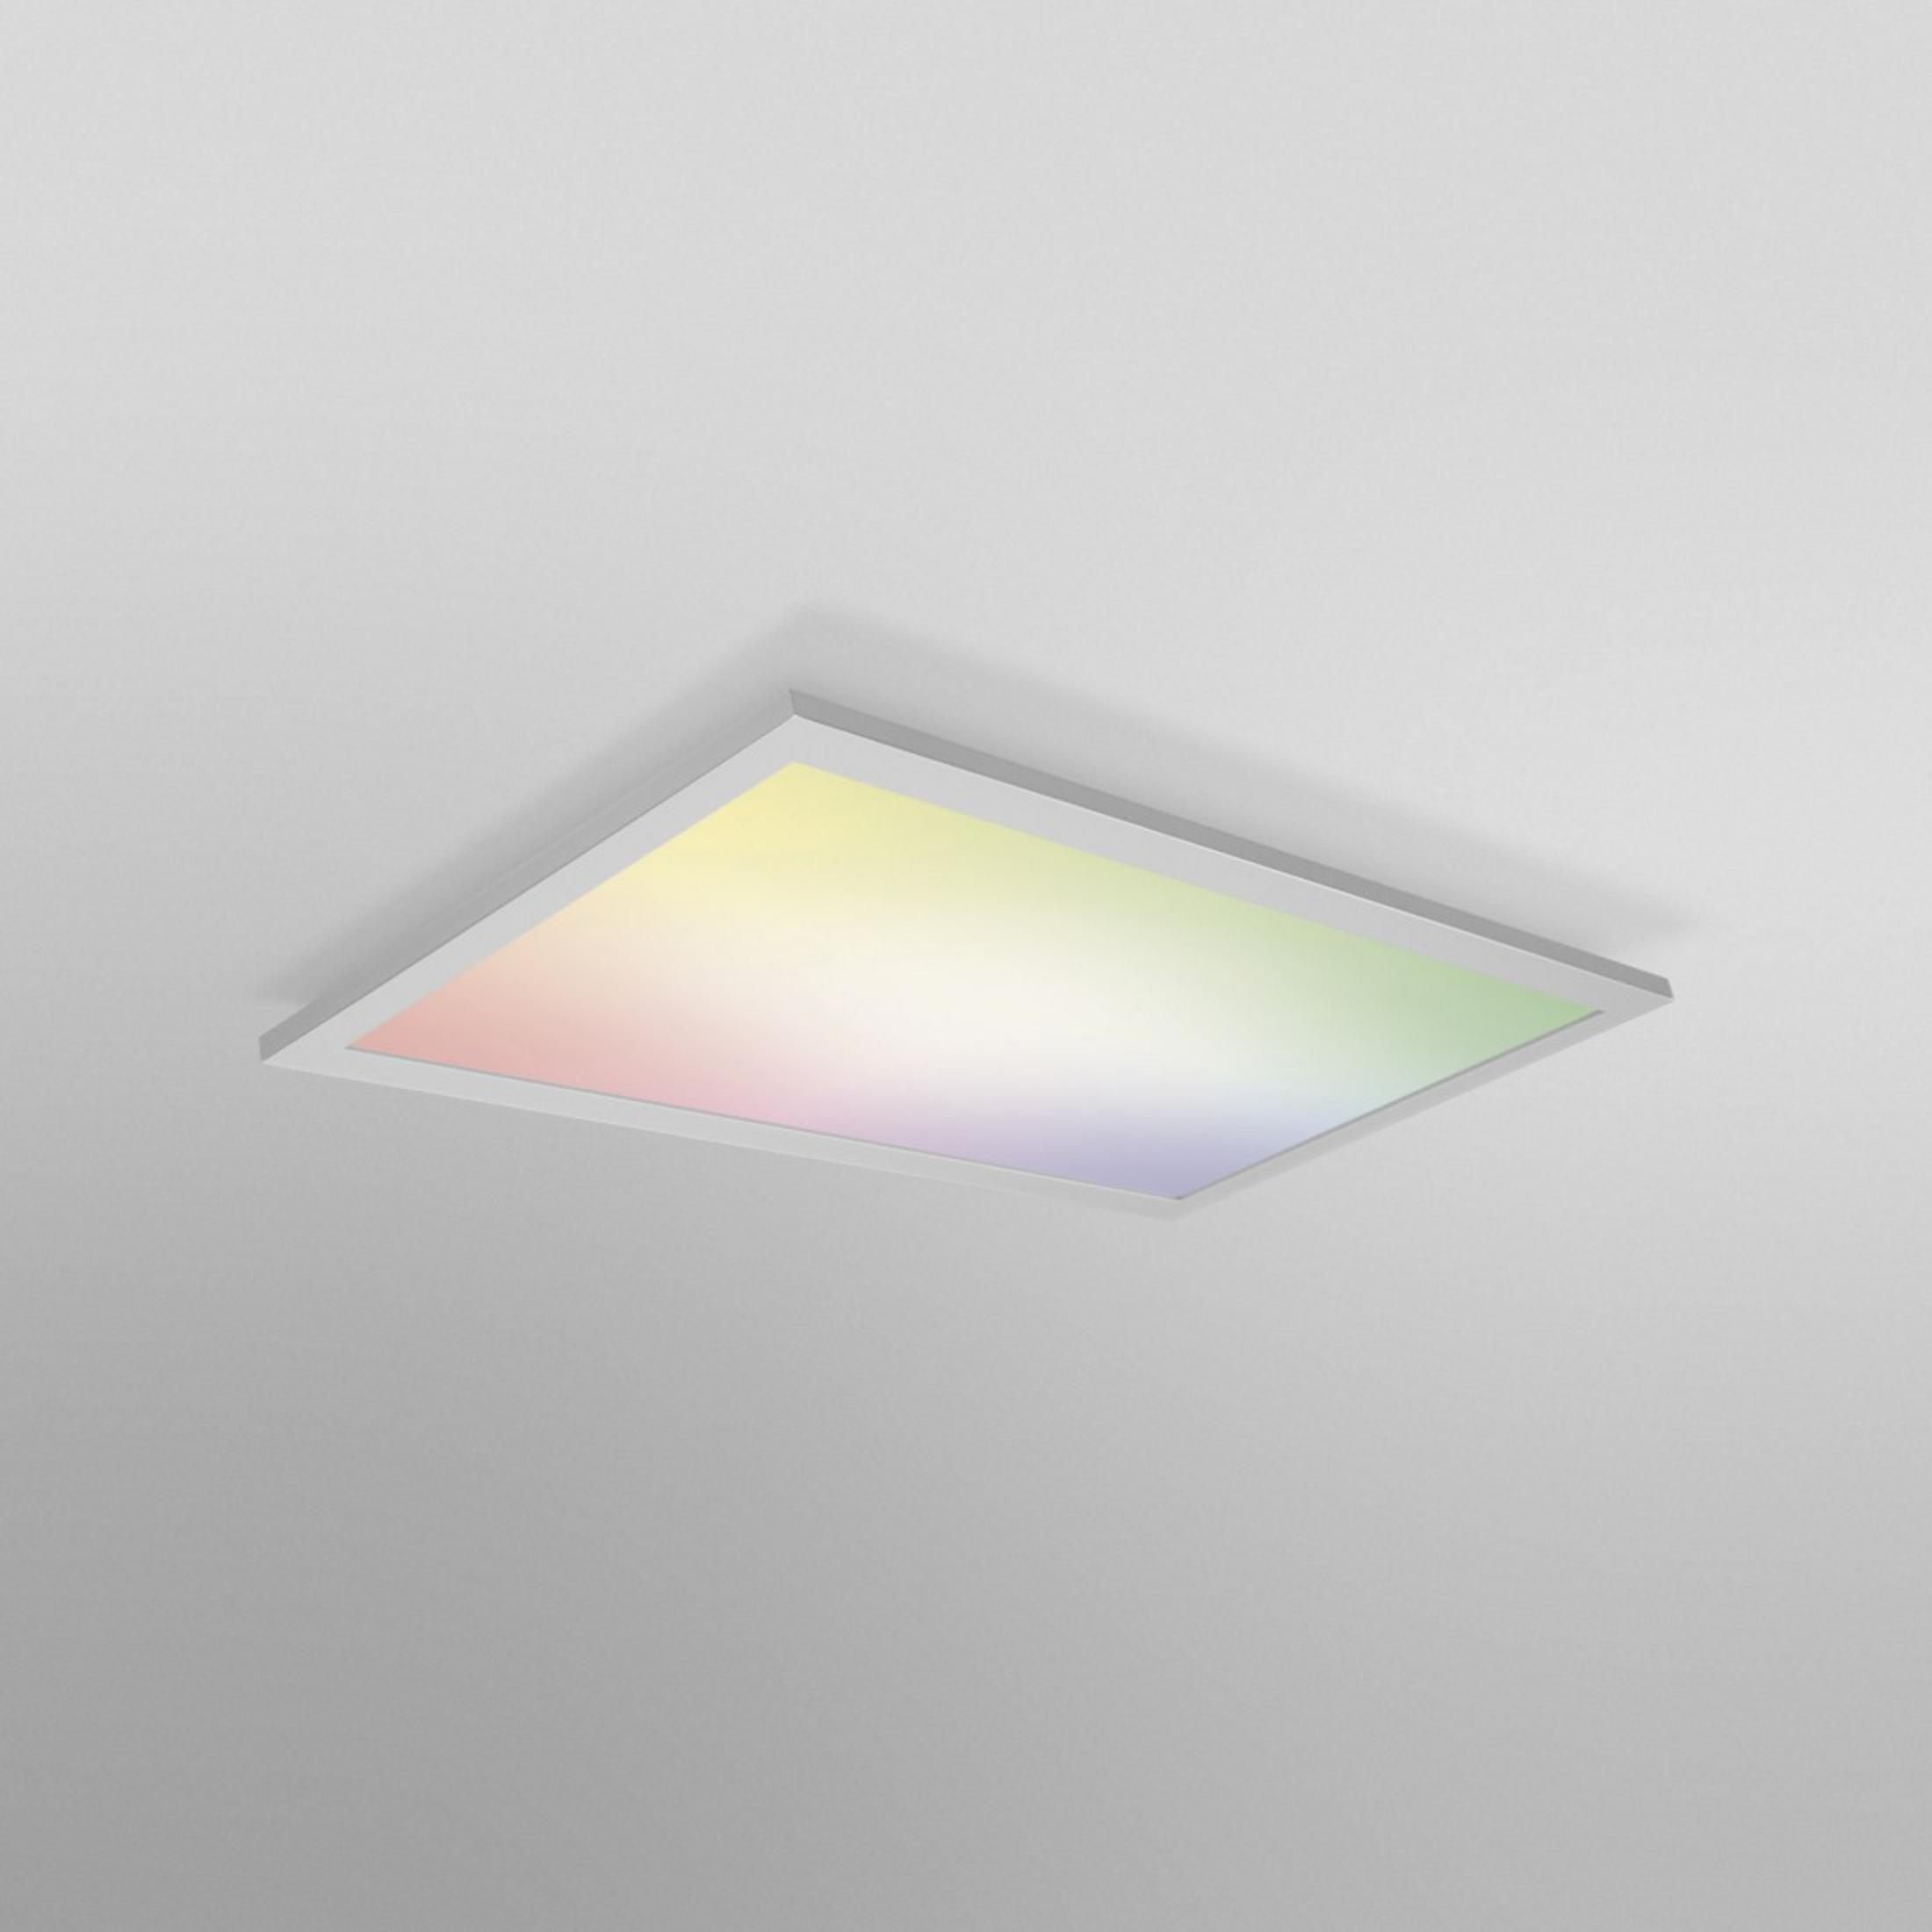 LEDVANCE SMART + 600X300 Panelleuchte PLUS WIFI RGBW PLANON